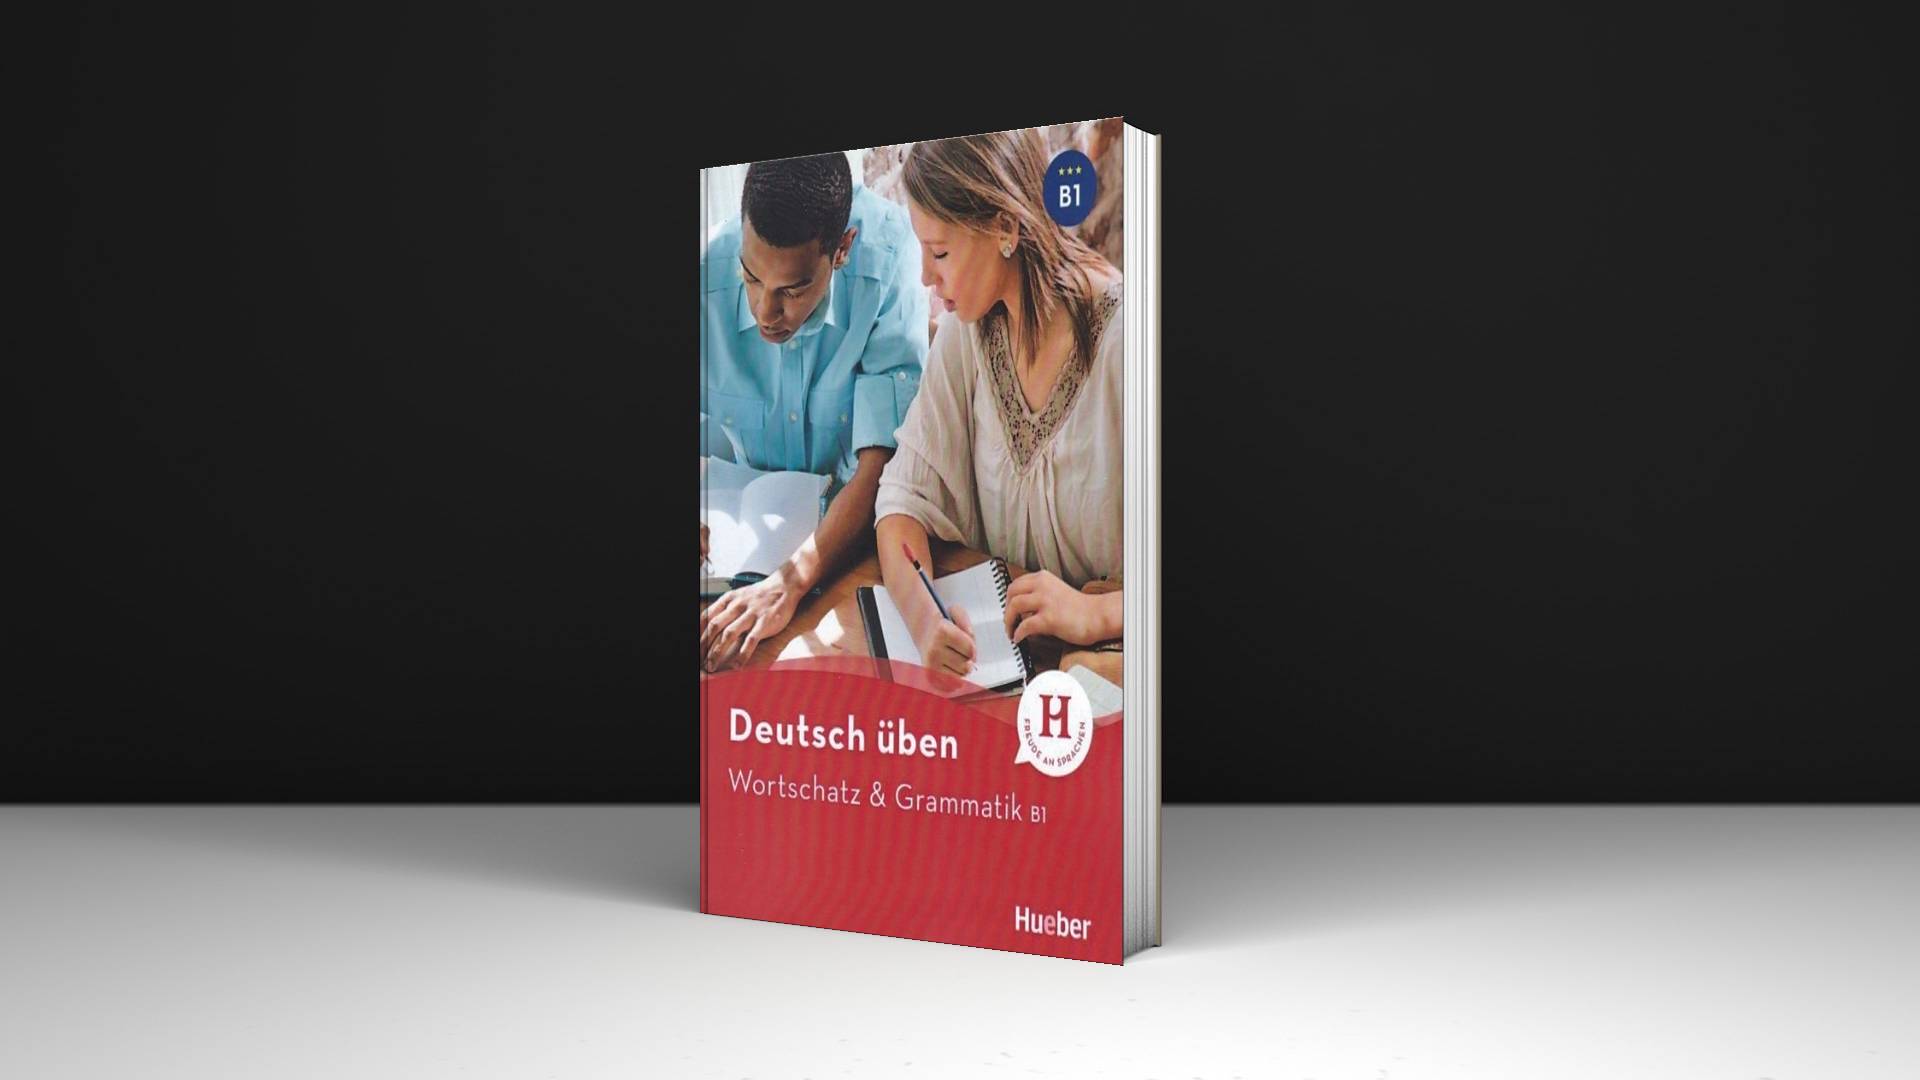 خرید کتاب زبان | ورچتز اند گرمتیک | Deutsch Uben Wortschatz & Grammatik B1 NEU | کتاب زبان آلمانی